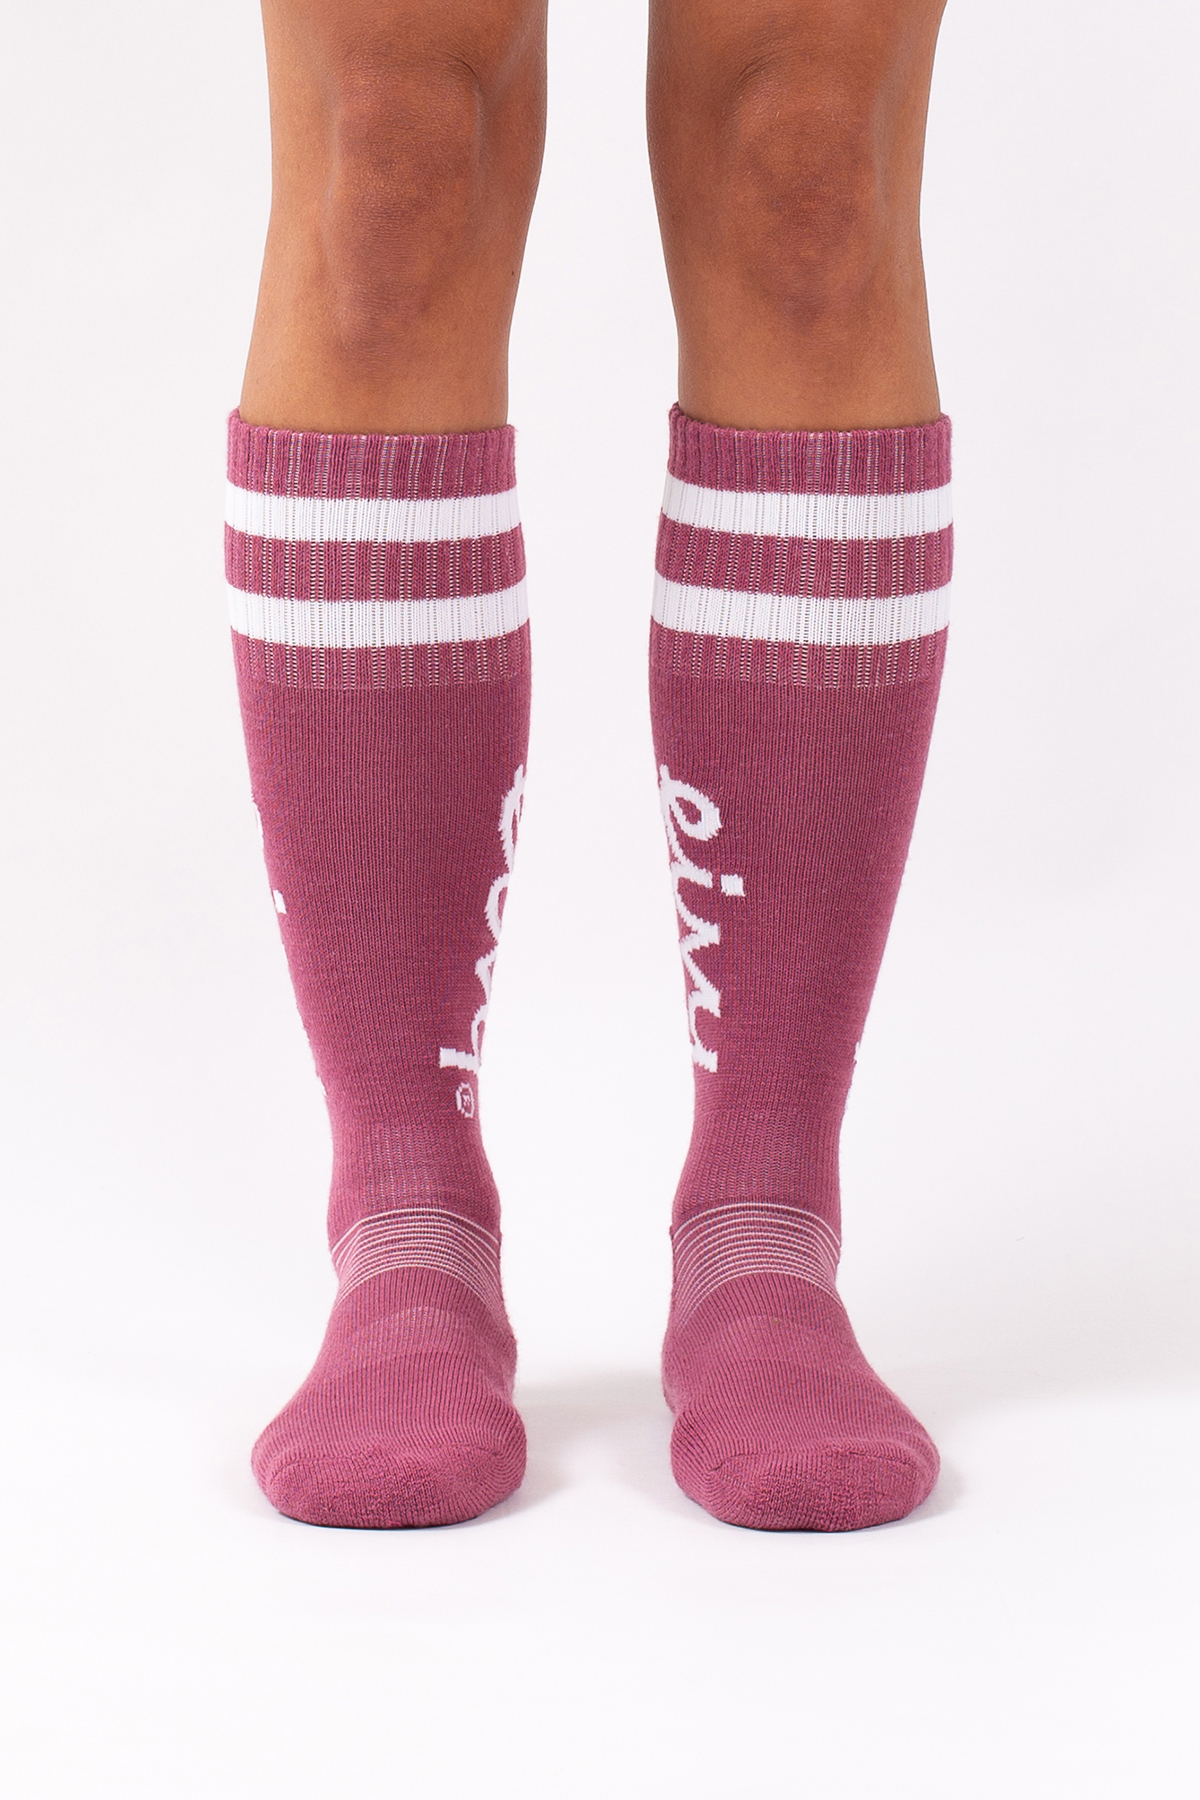 Cheerleader Wool Socks - Raspberry